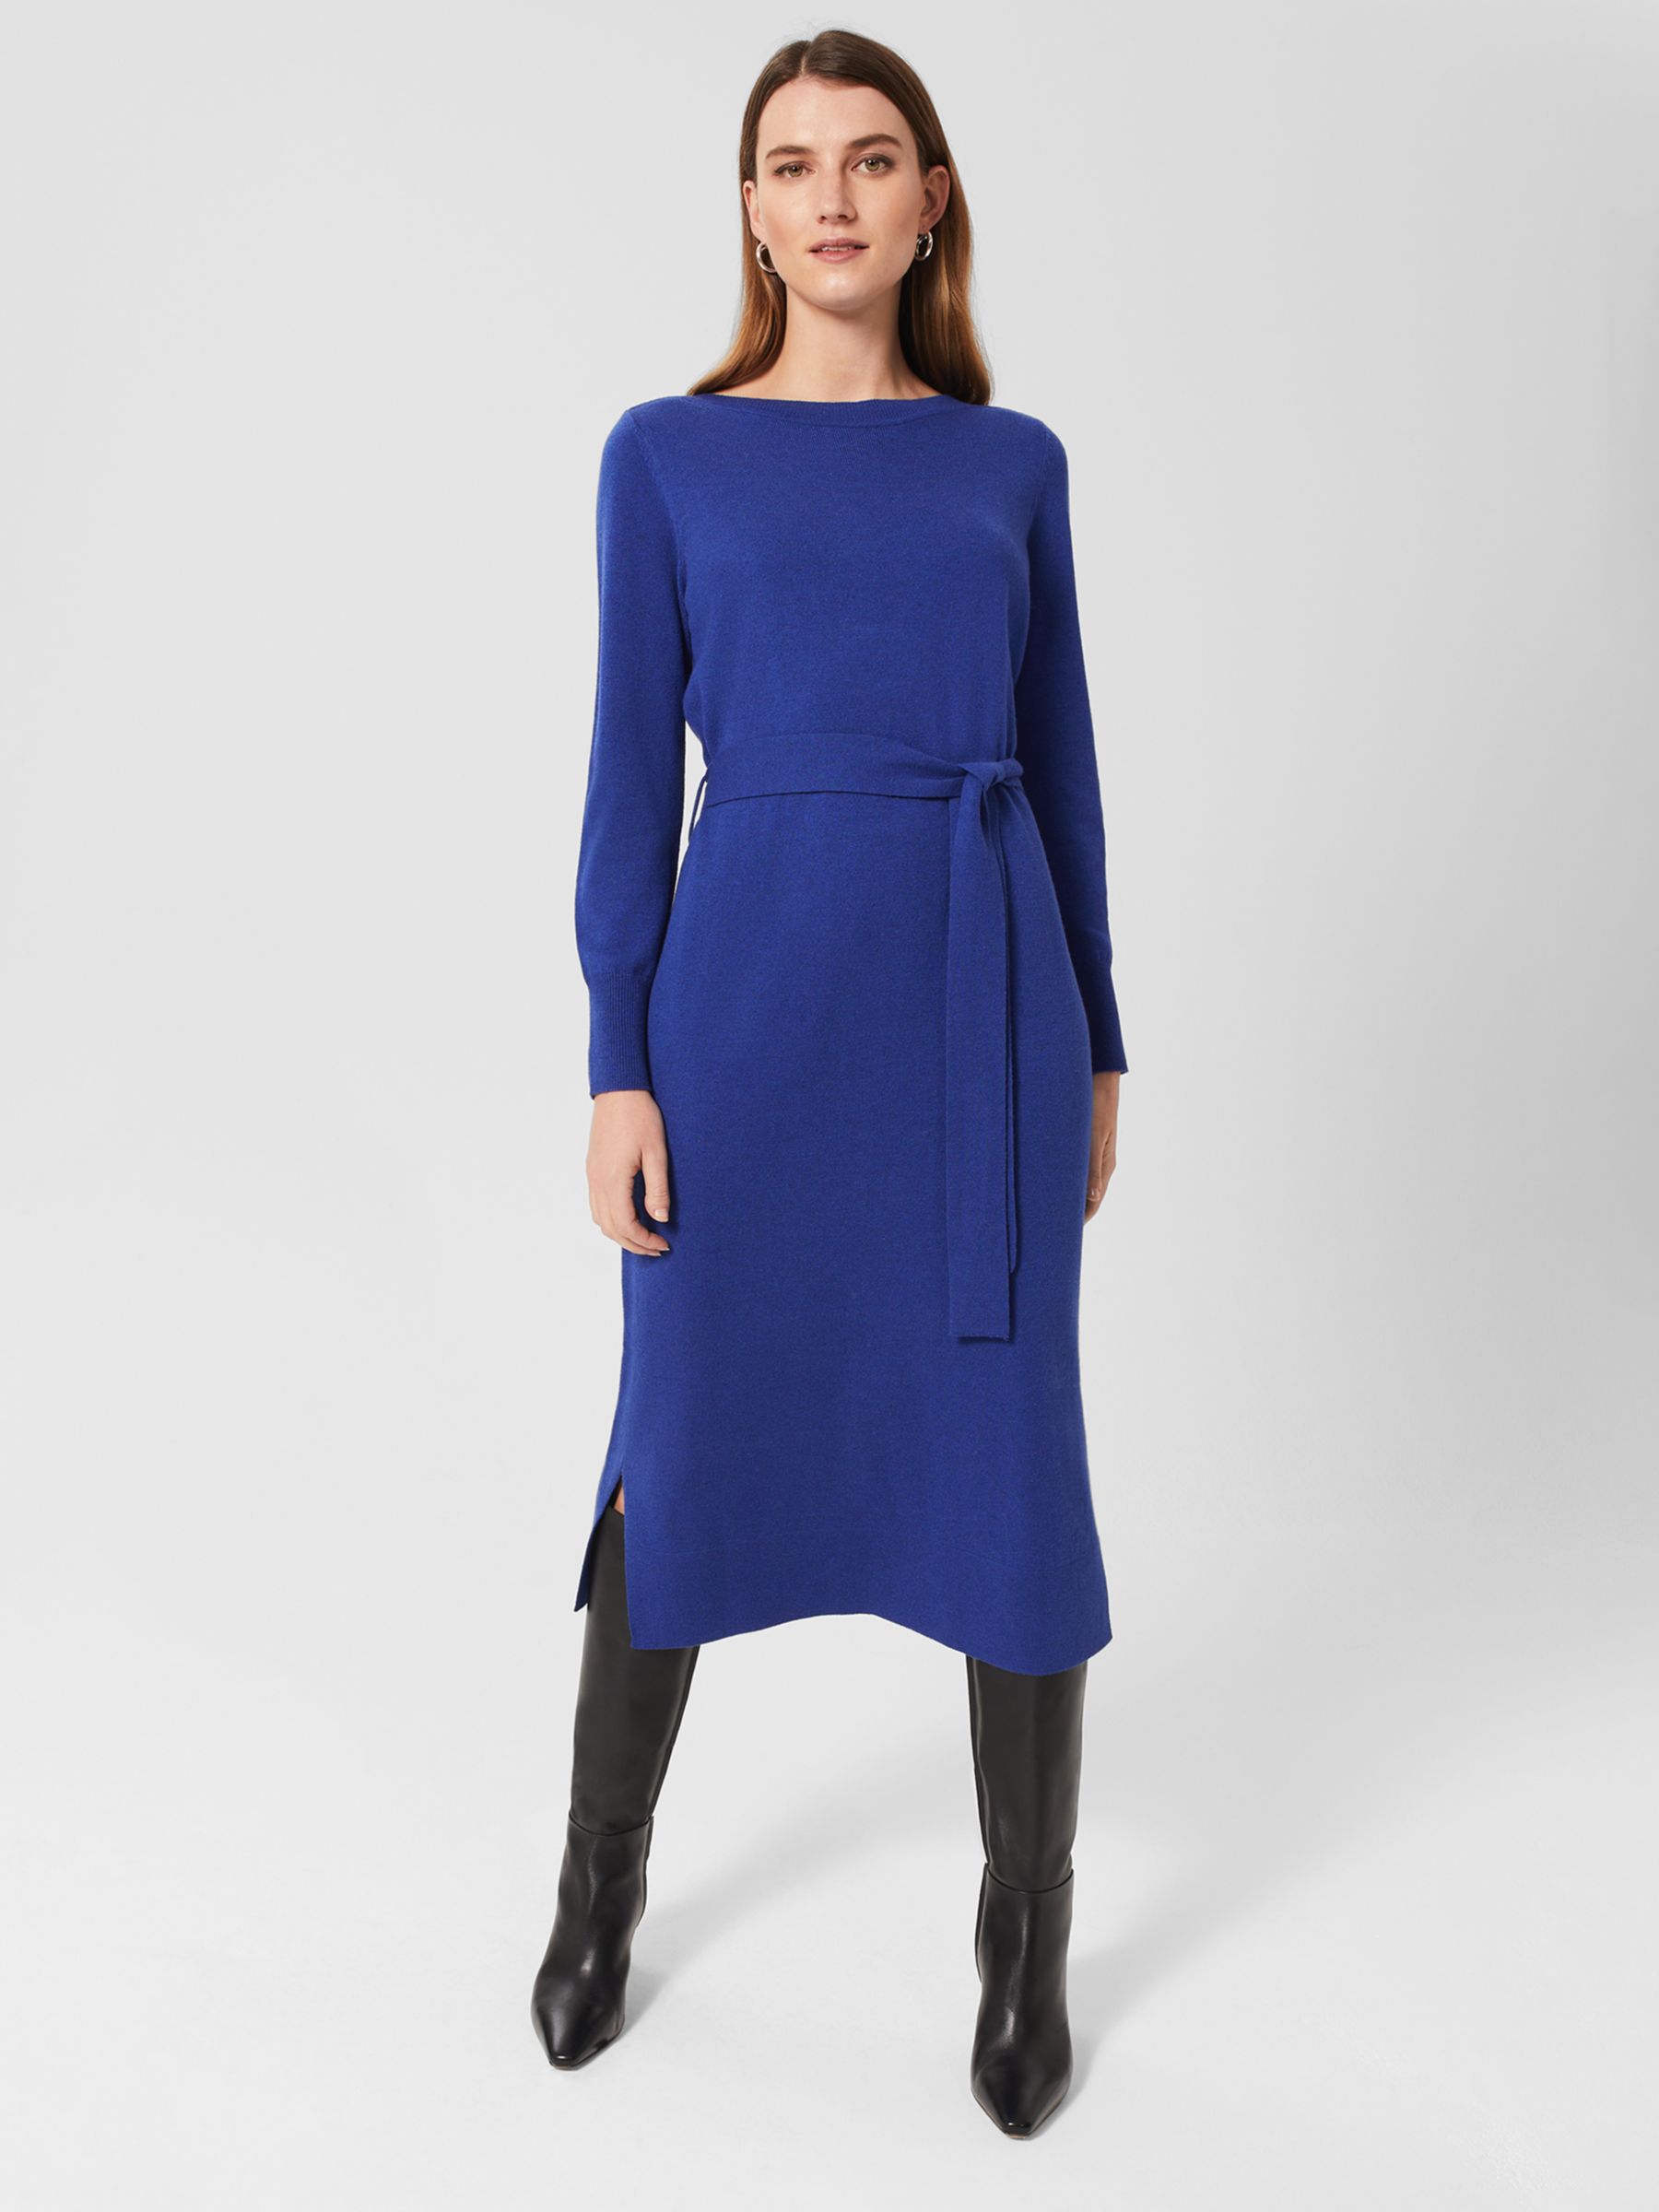 Hobbs Eloise Wool Blend Knit Midi Dress Cobalt Blue At John Lewis And Partners 